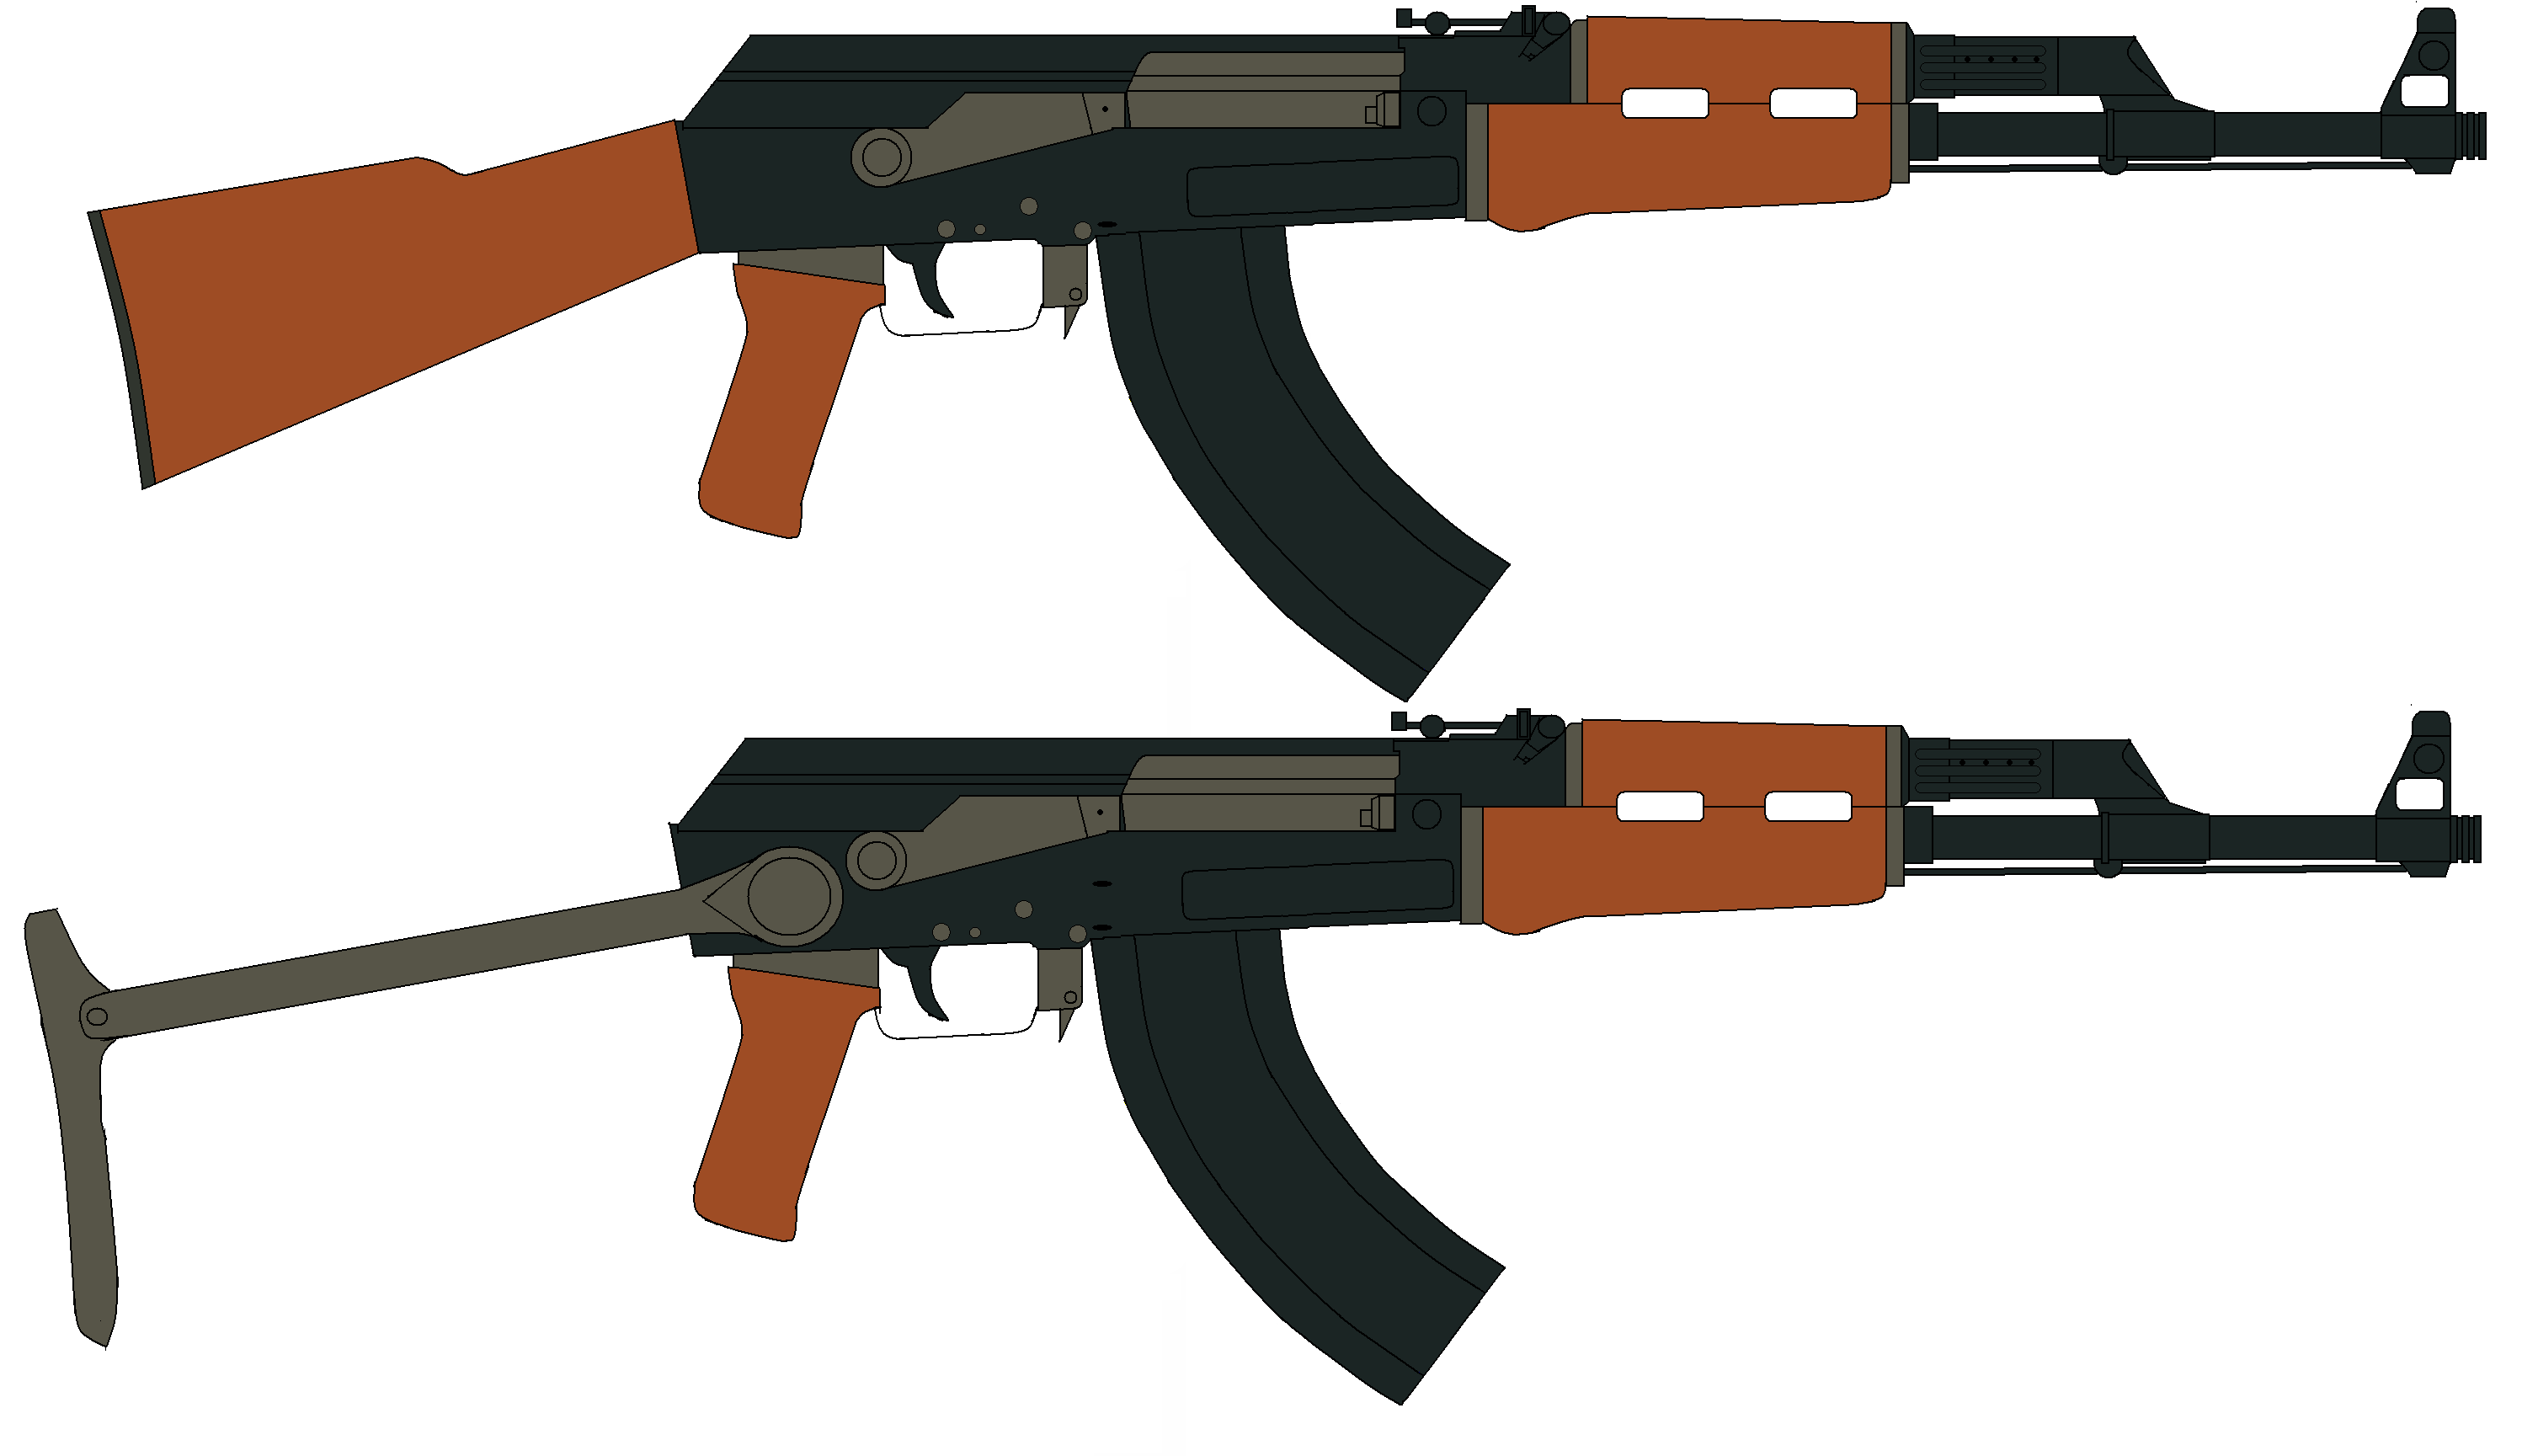 AK-47 by kfirpanther3 on DeviantArt